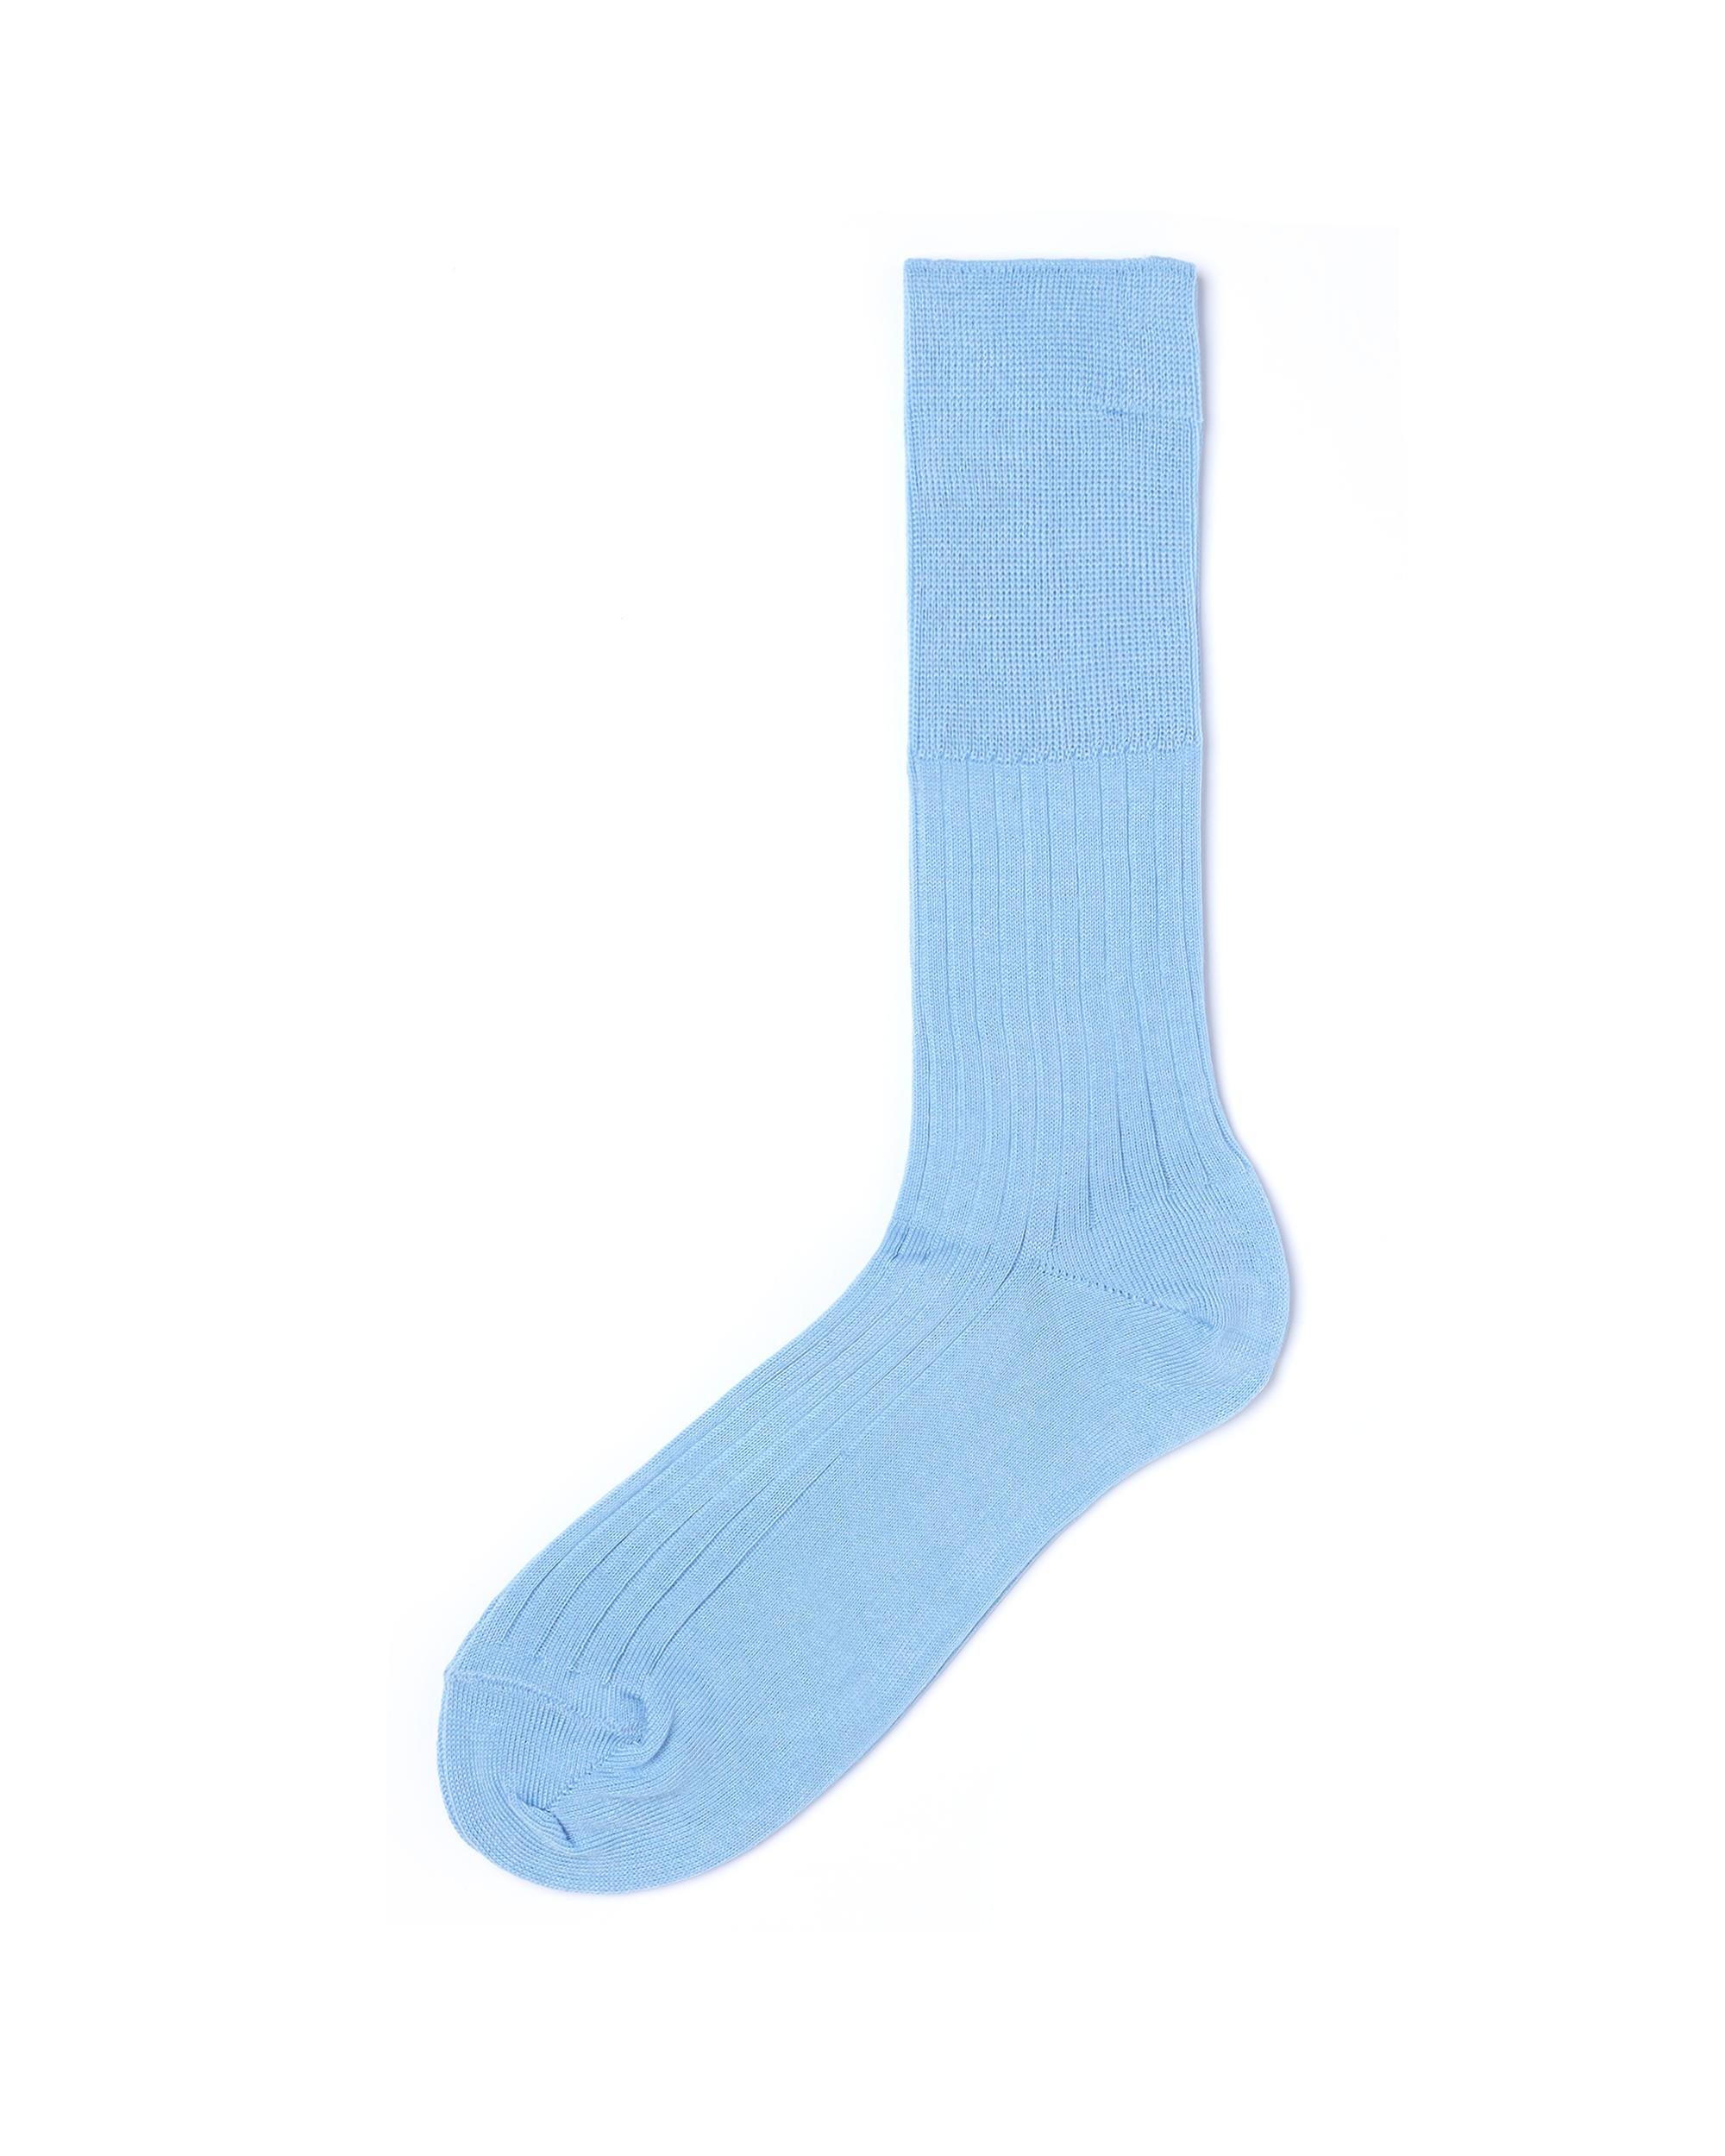 Long socks by TAO